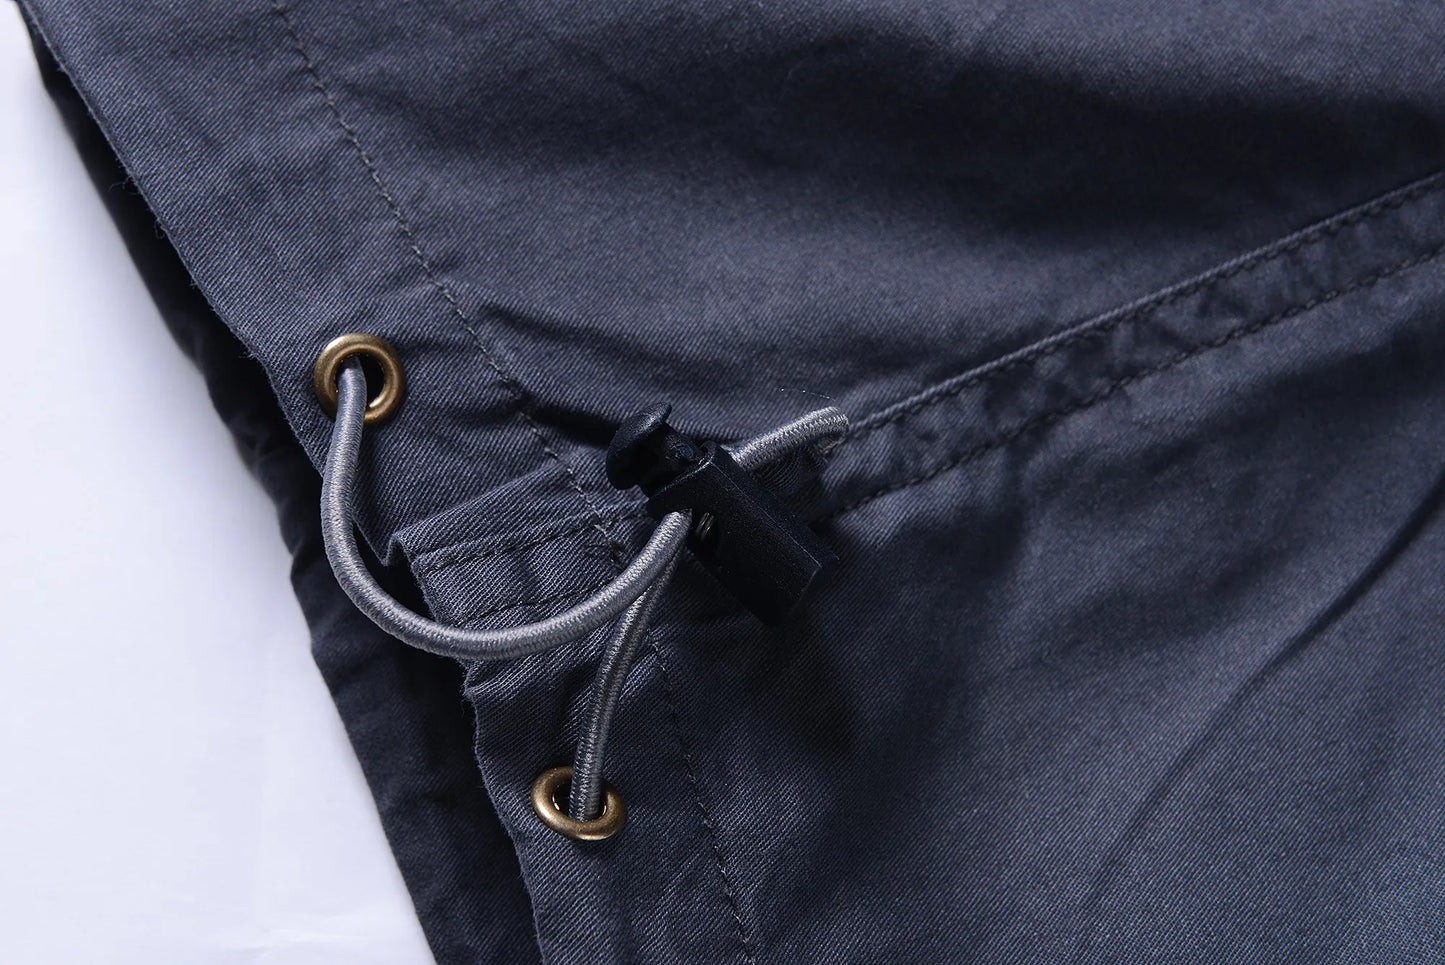 Men's Overalls Cotton Multi-bag Trousers Cargo Pants Tactical Pants for Men Pants Military Tactical Y2k Work Pants for Men